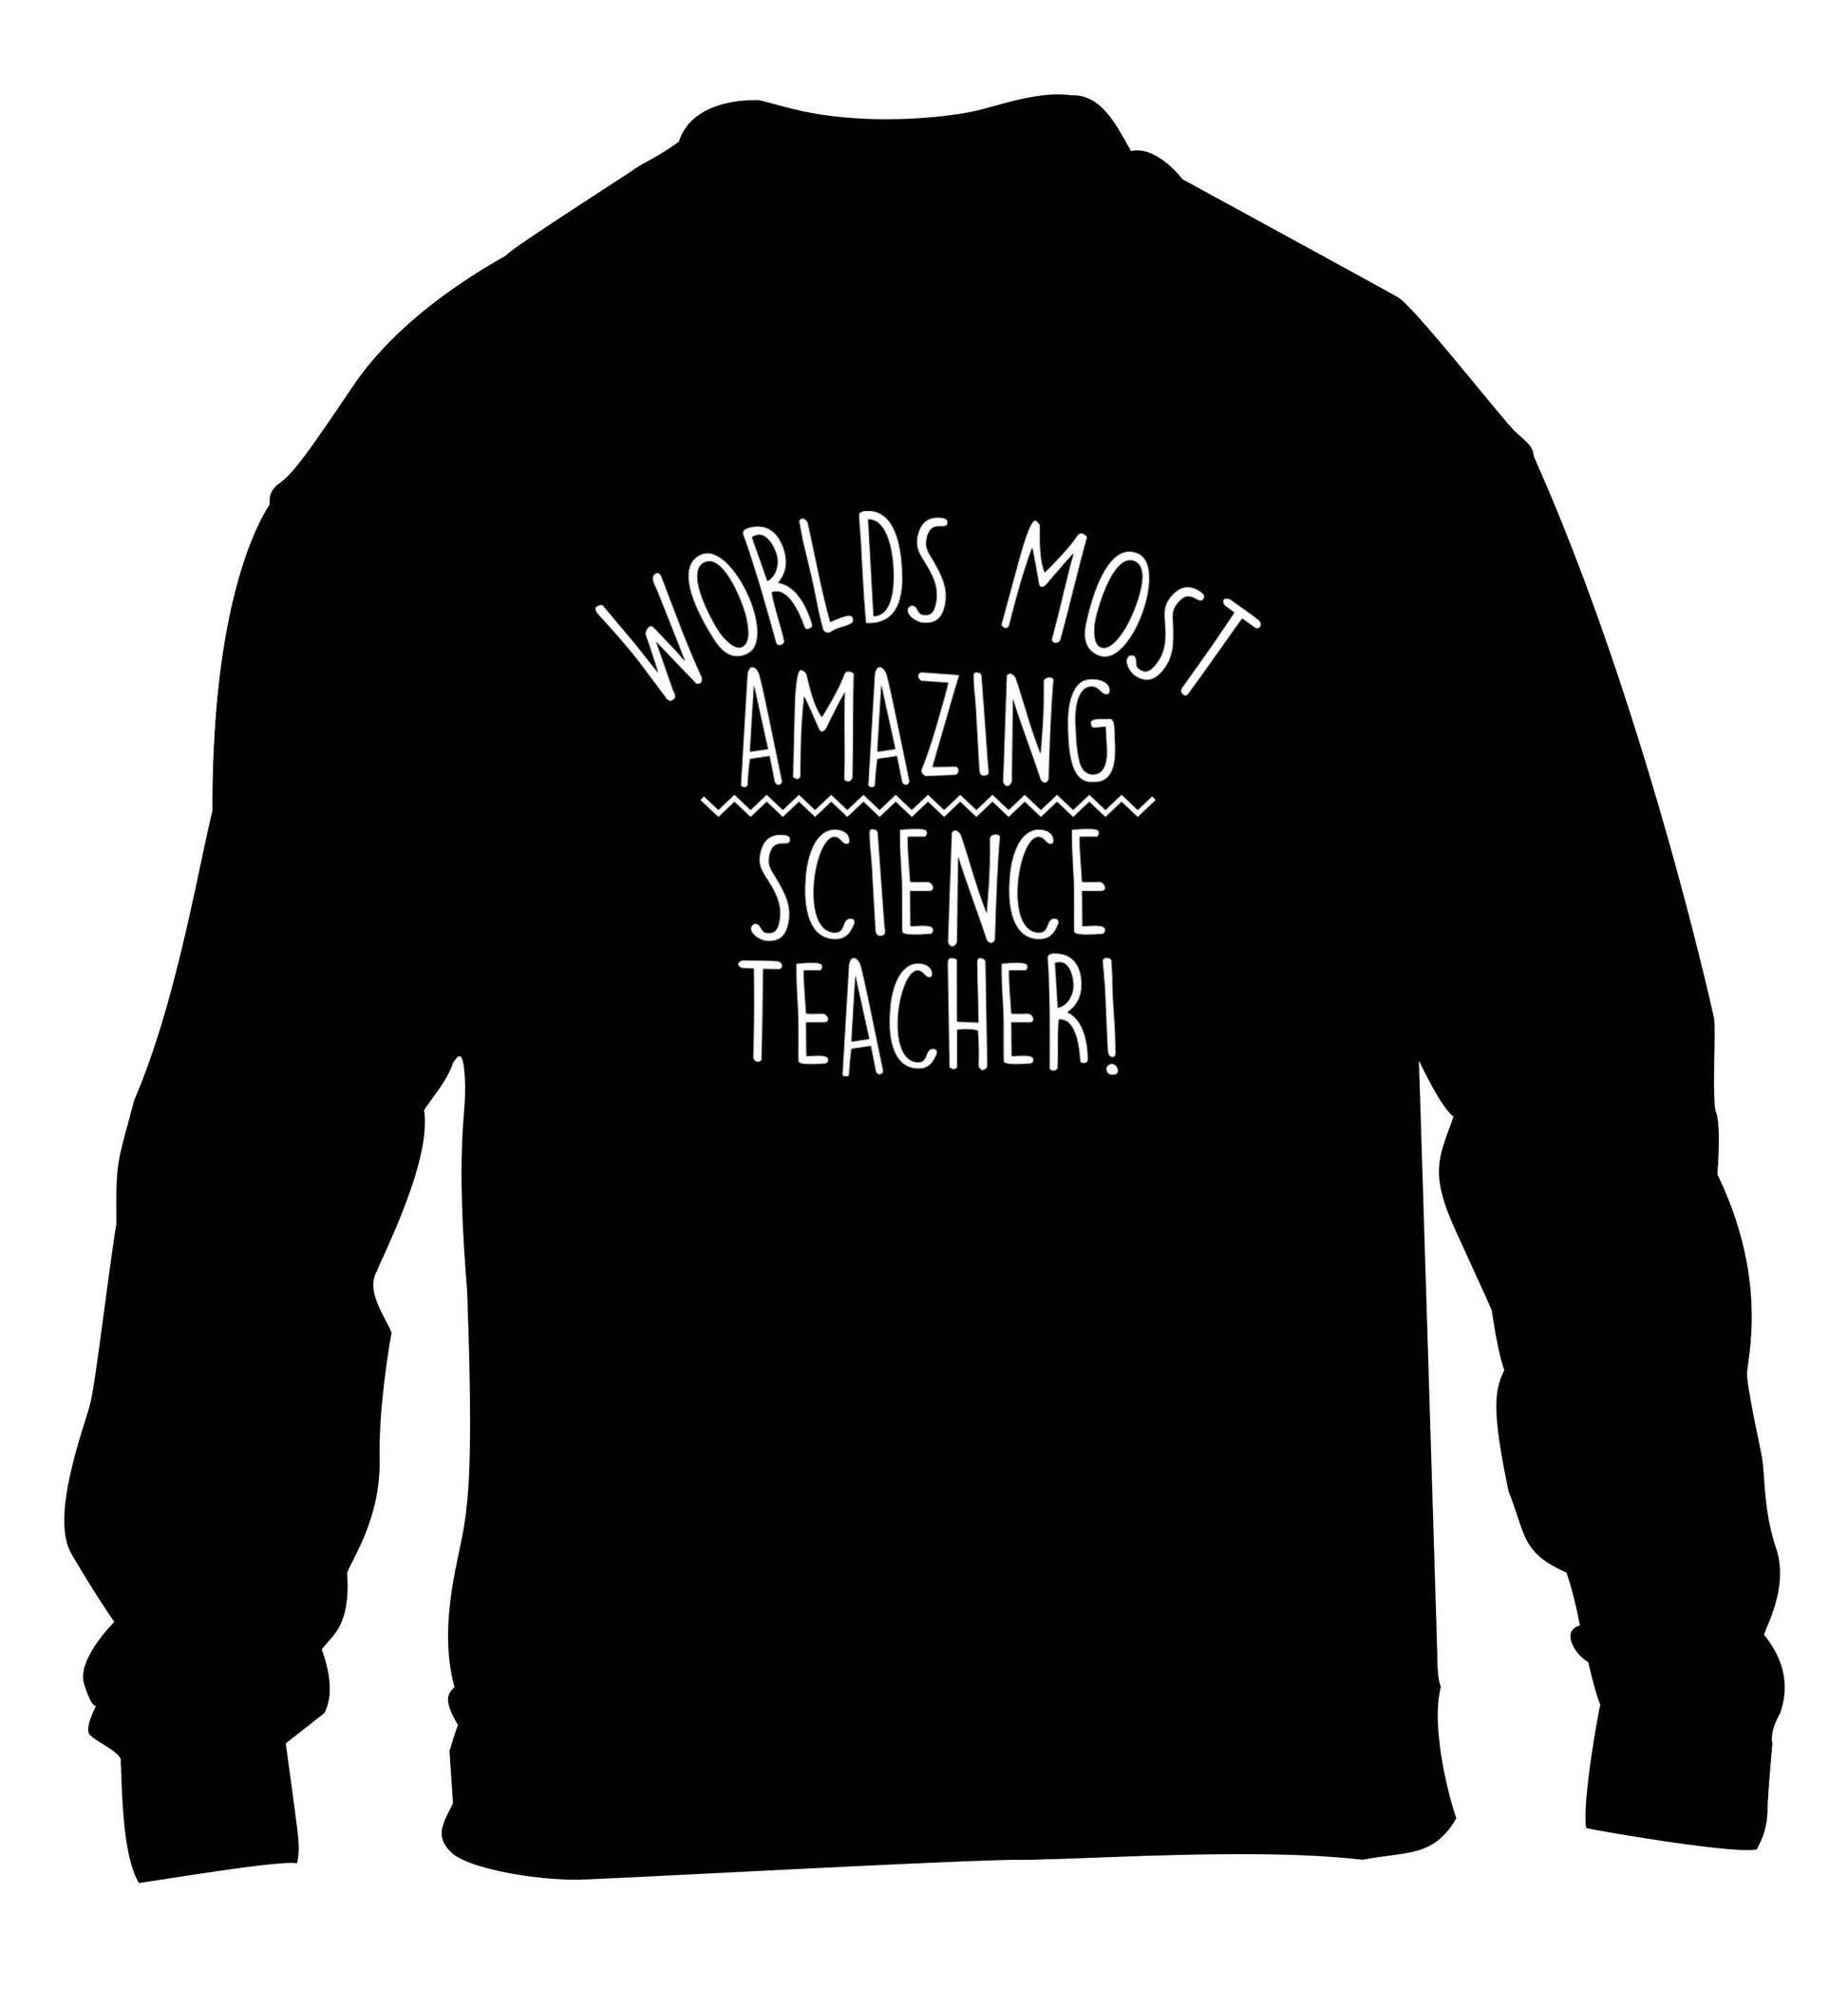 Worlds most amazing science teacher children's black sweater 12-13 Years